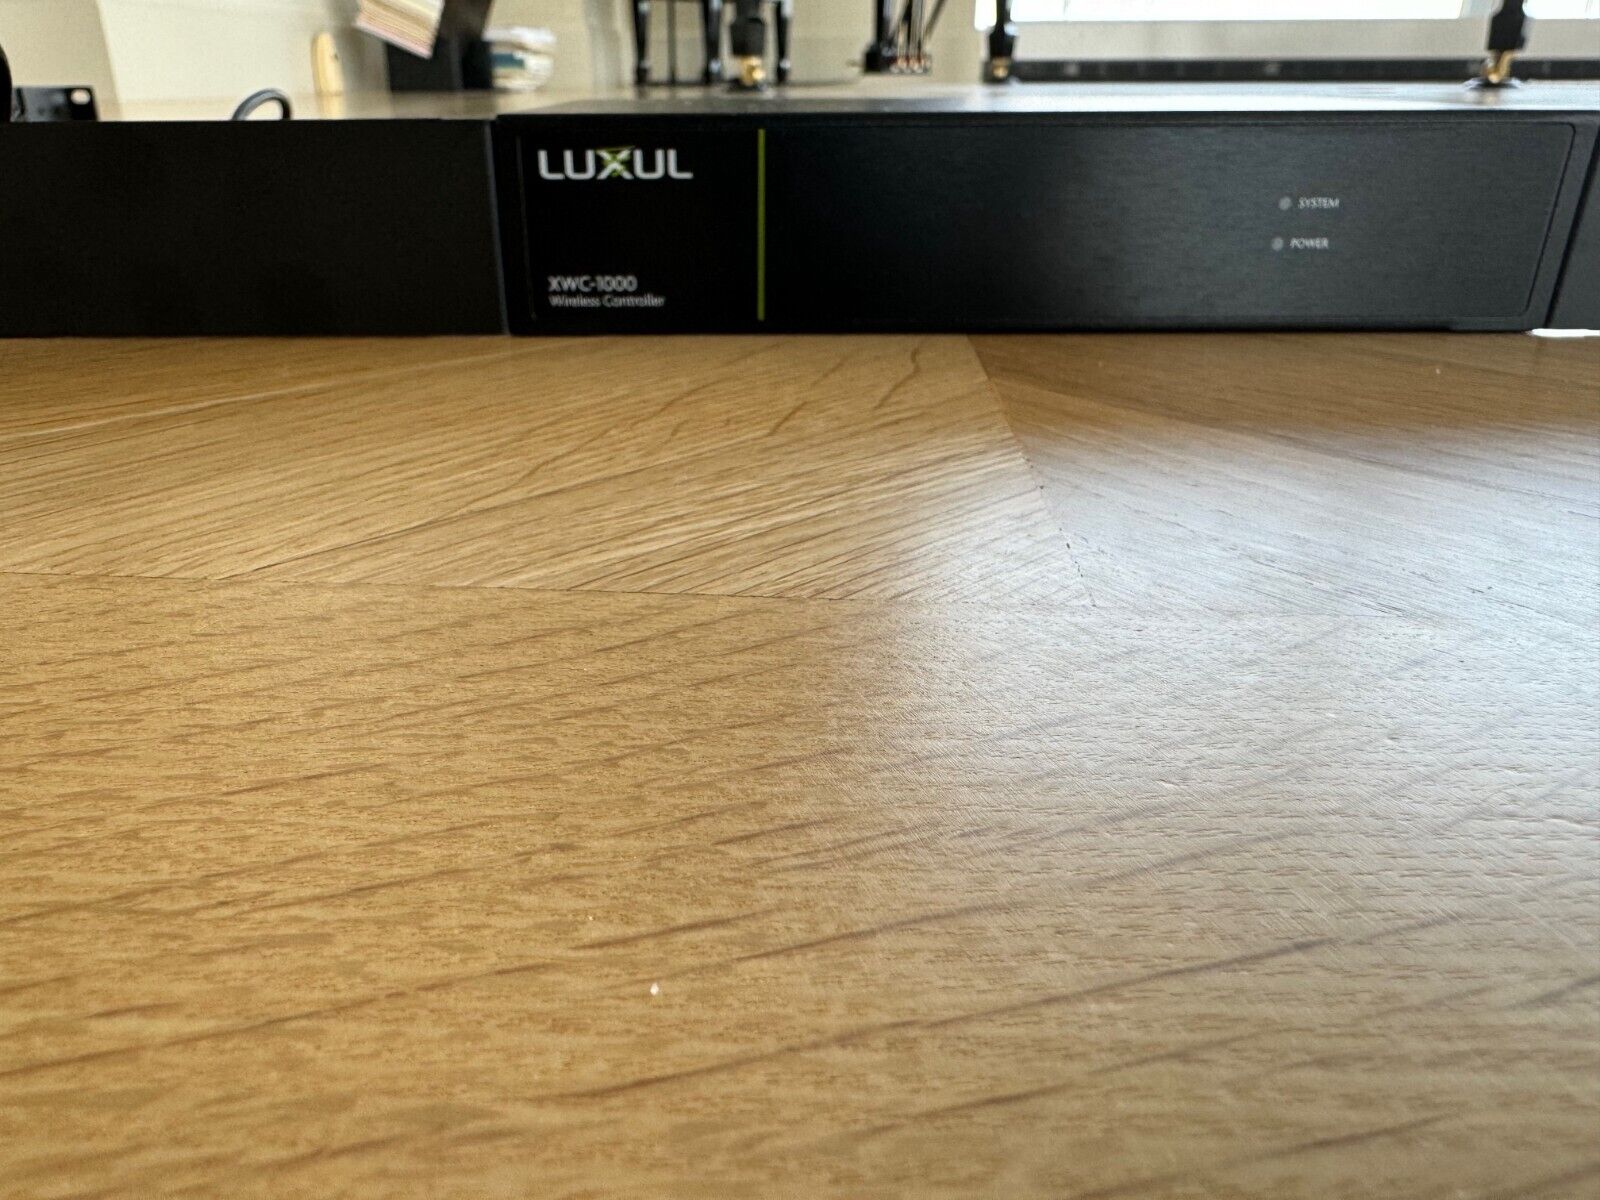 Luxul XWC-1000 Vers. 2, Gigabit Wireless Controller & Power Cord